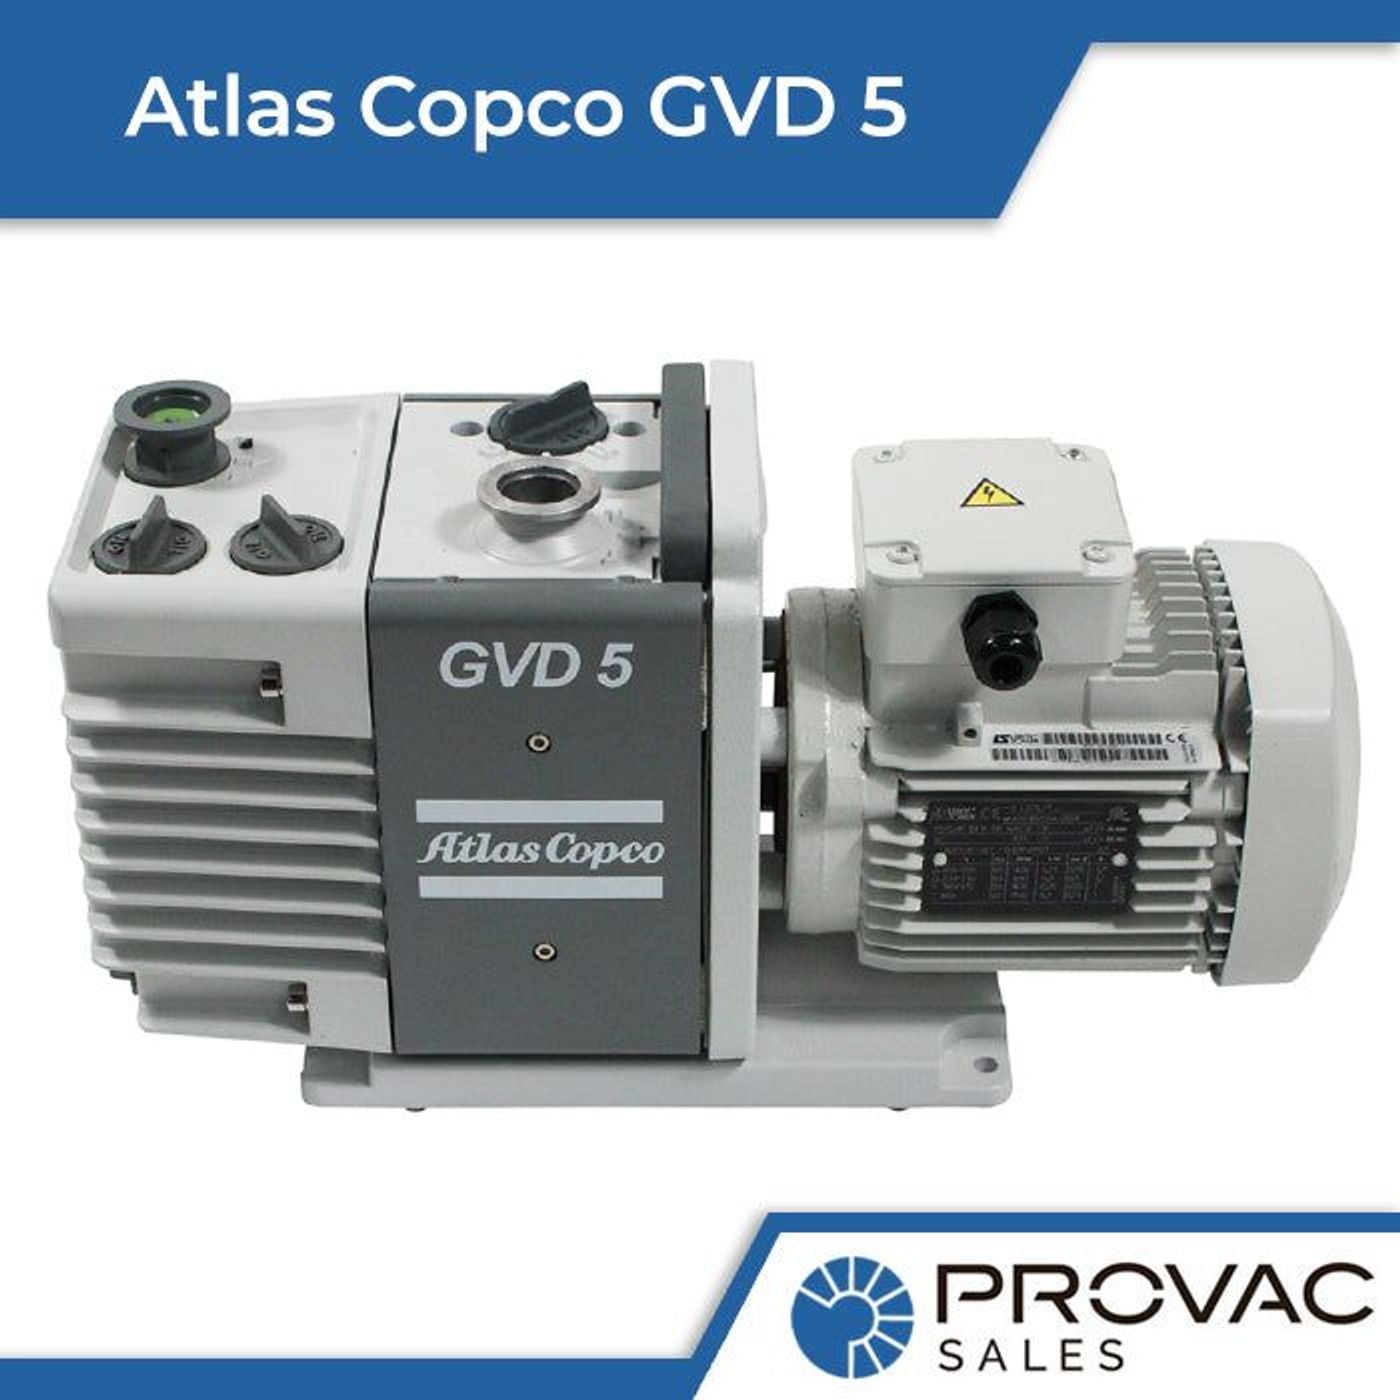 On Sale Now: Atlas Copco GVD 5 Rotary Vane Pump